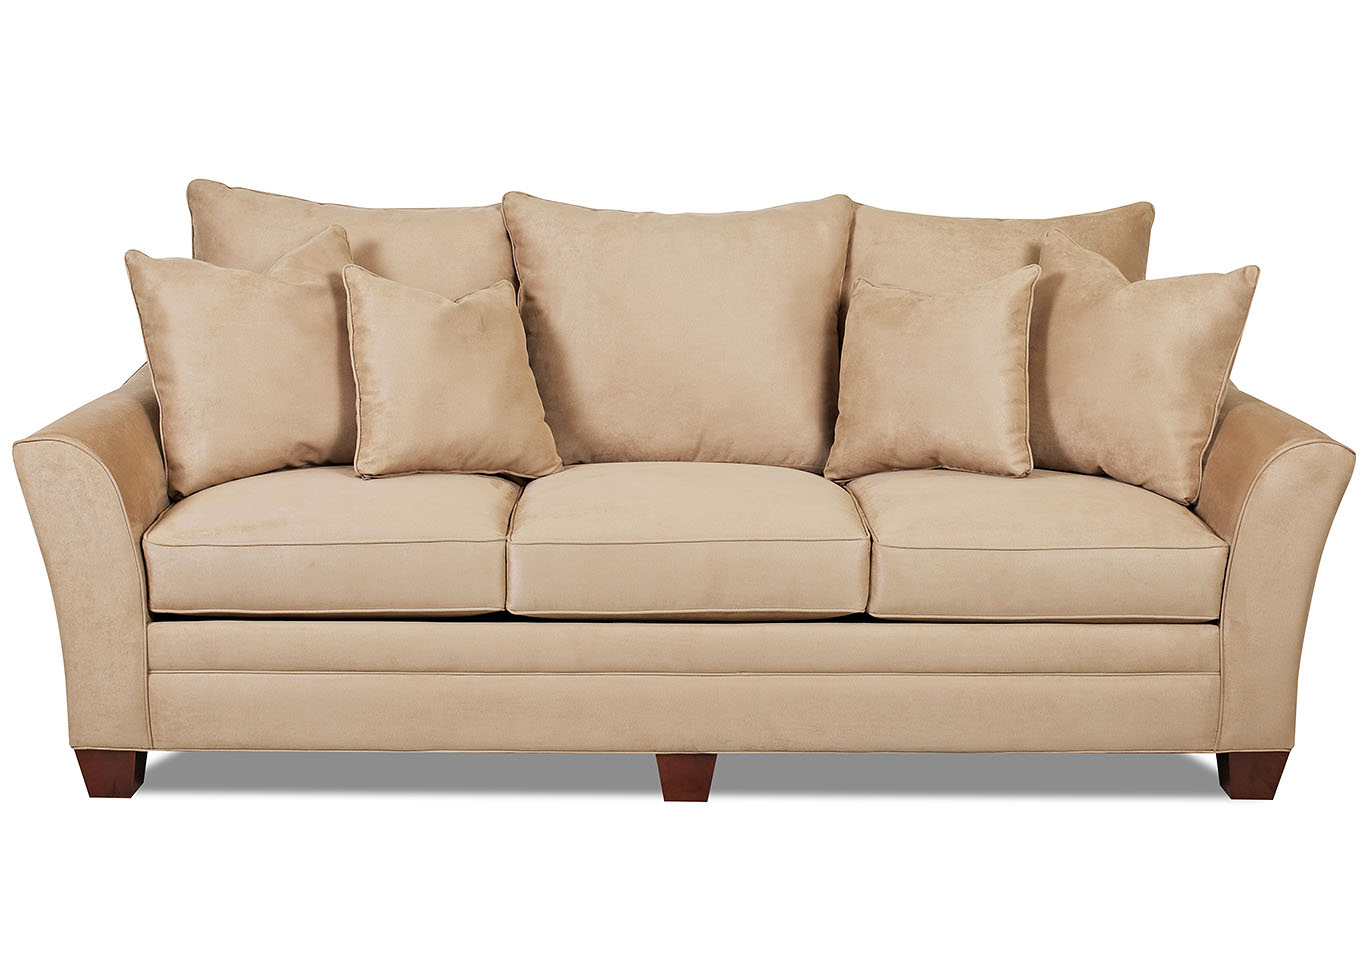 Posen Beige Stationary Fabric Sofa,Klaussner Home Furnishings